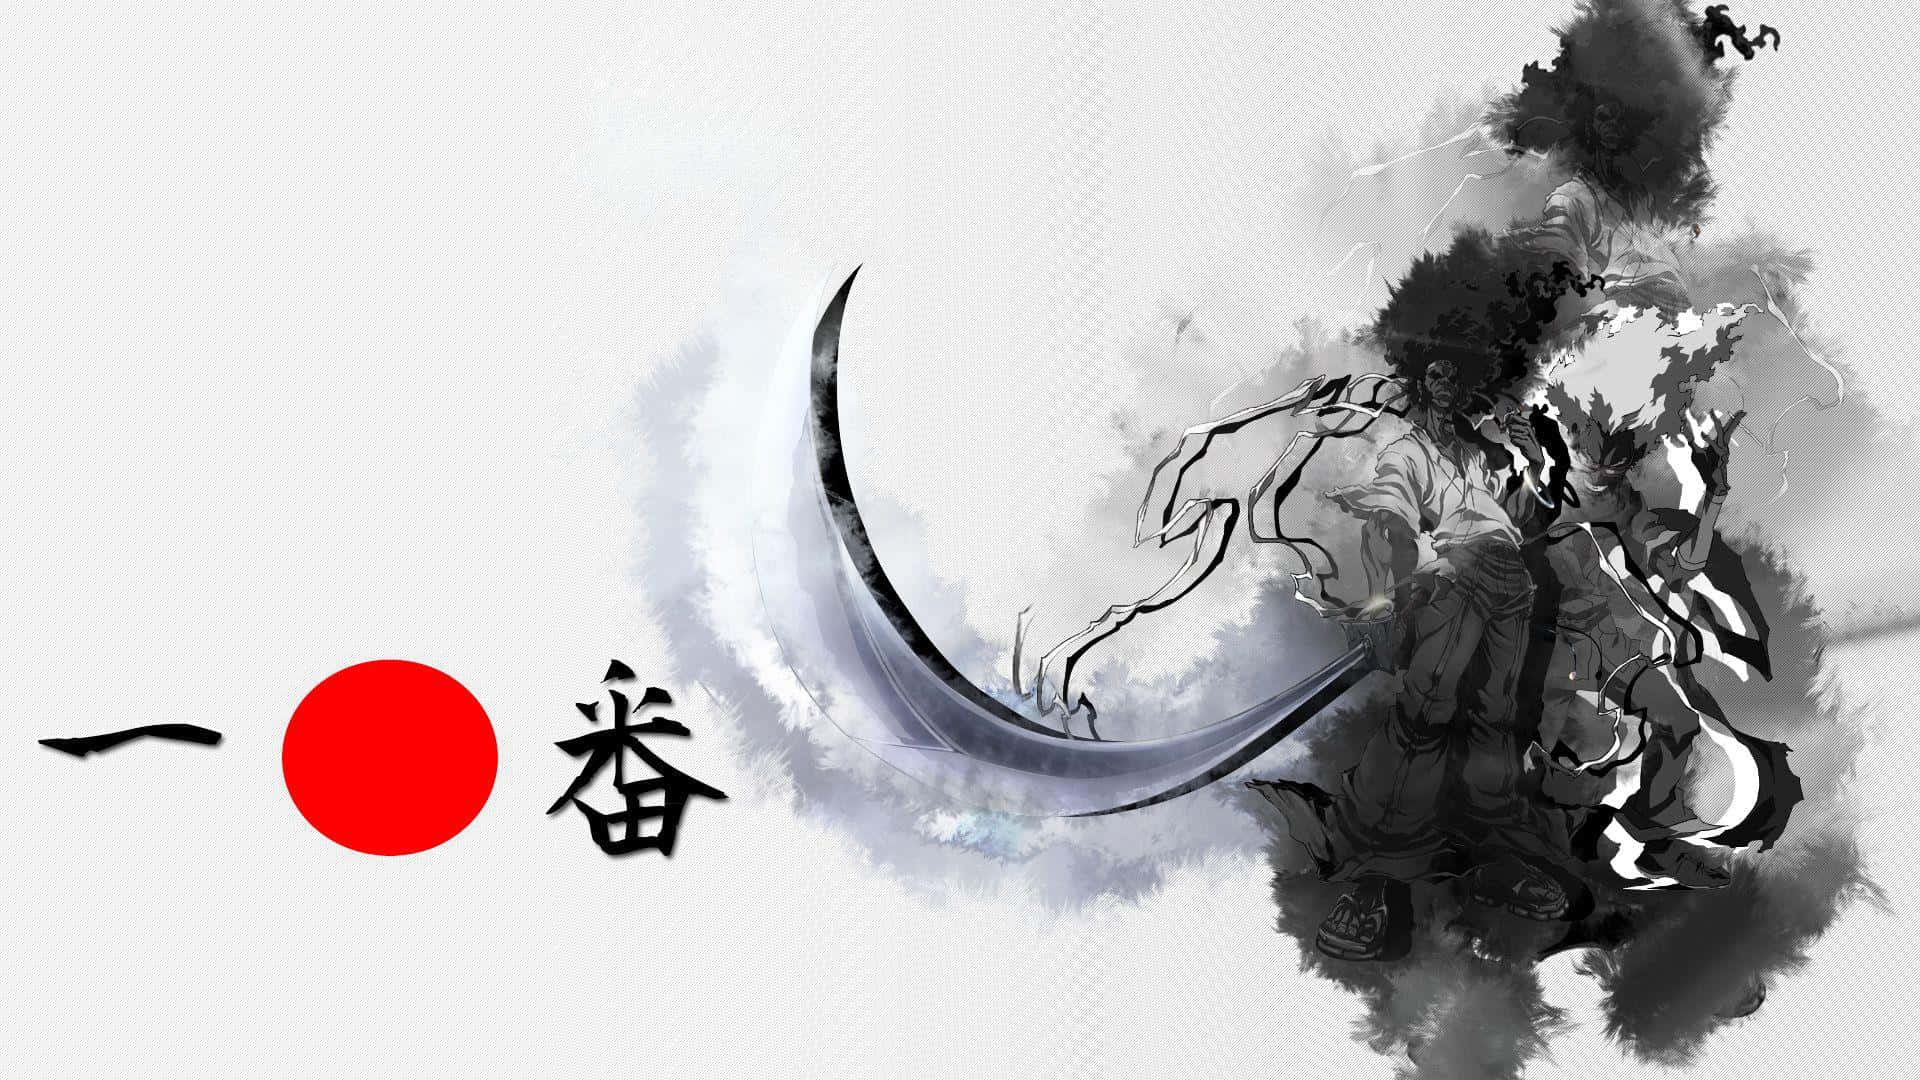 [100+] Bushido Samurai Wallpapers | Wallpapers.com